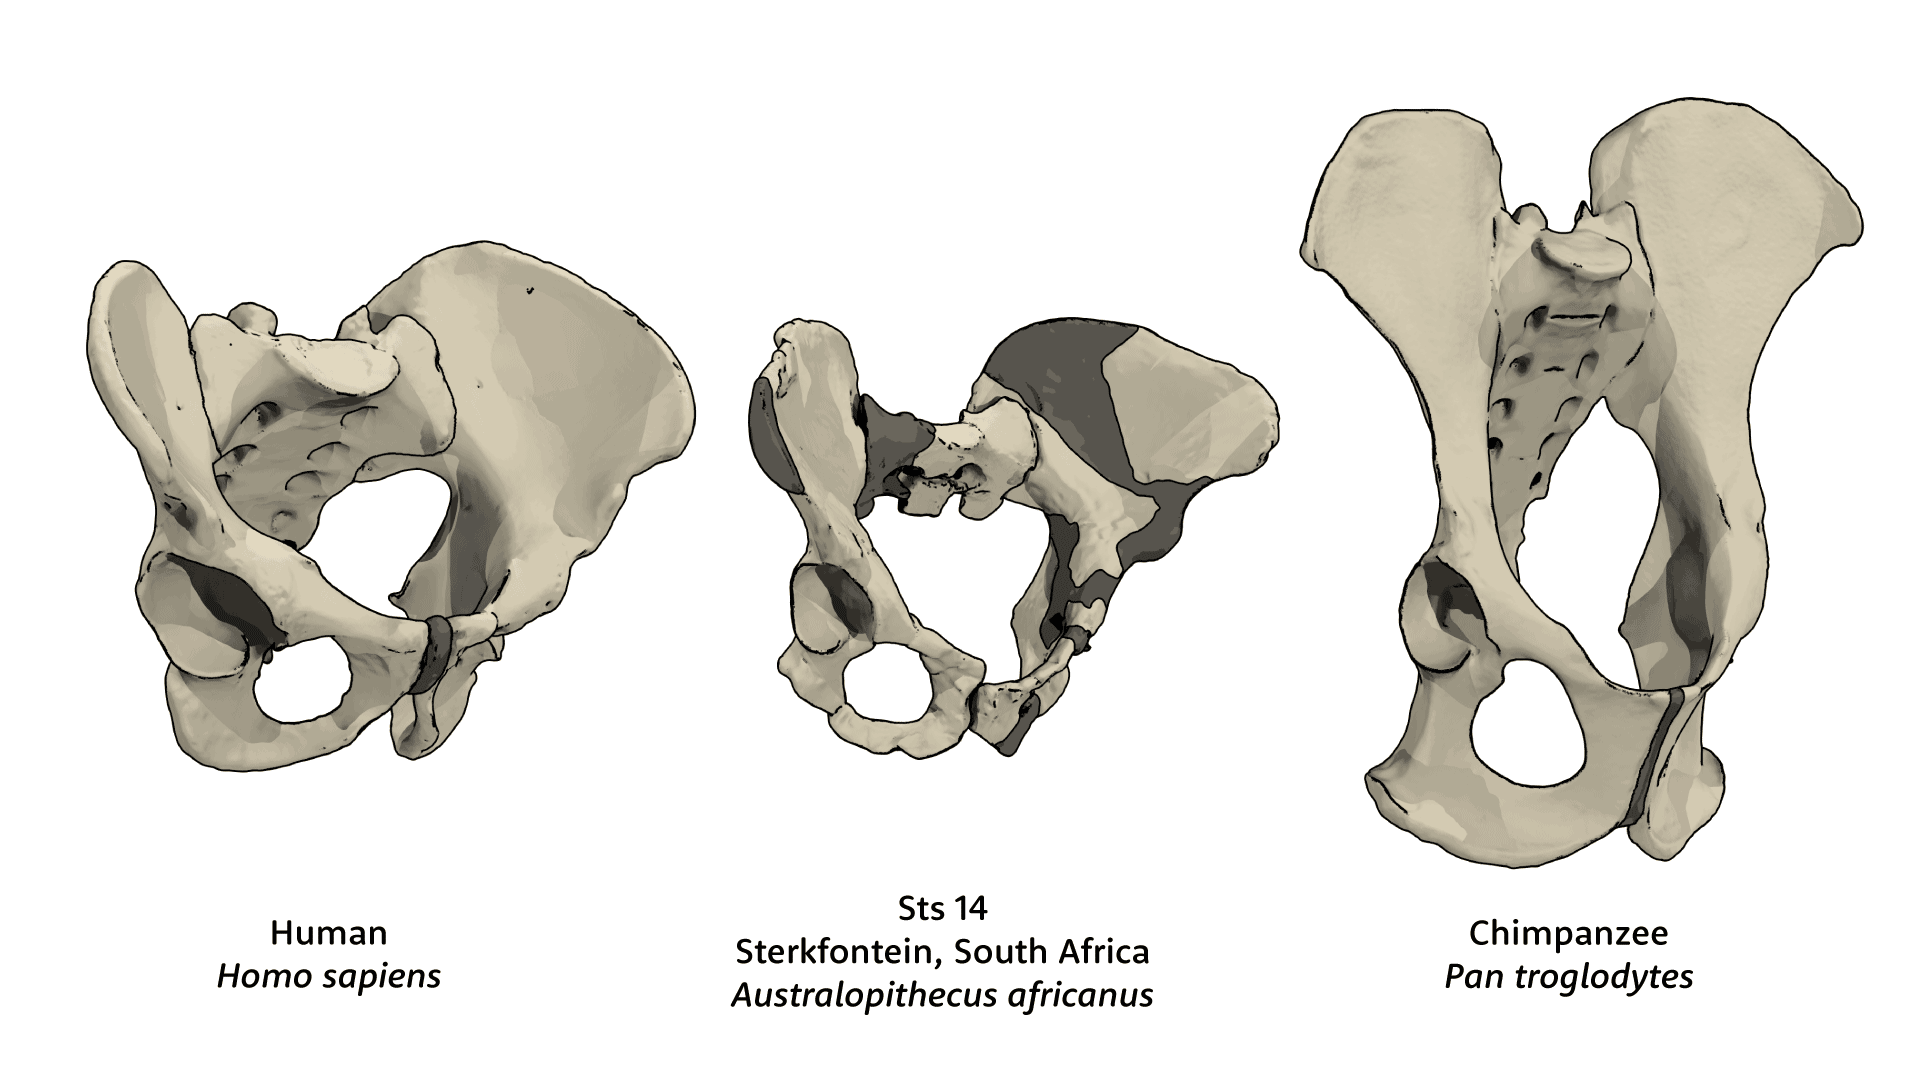 Pelvis of human, Sts 14 fossil Australopithecus africanus, and chimpanzee